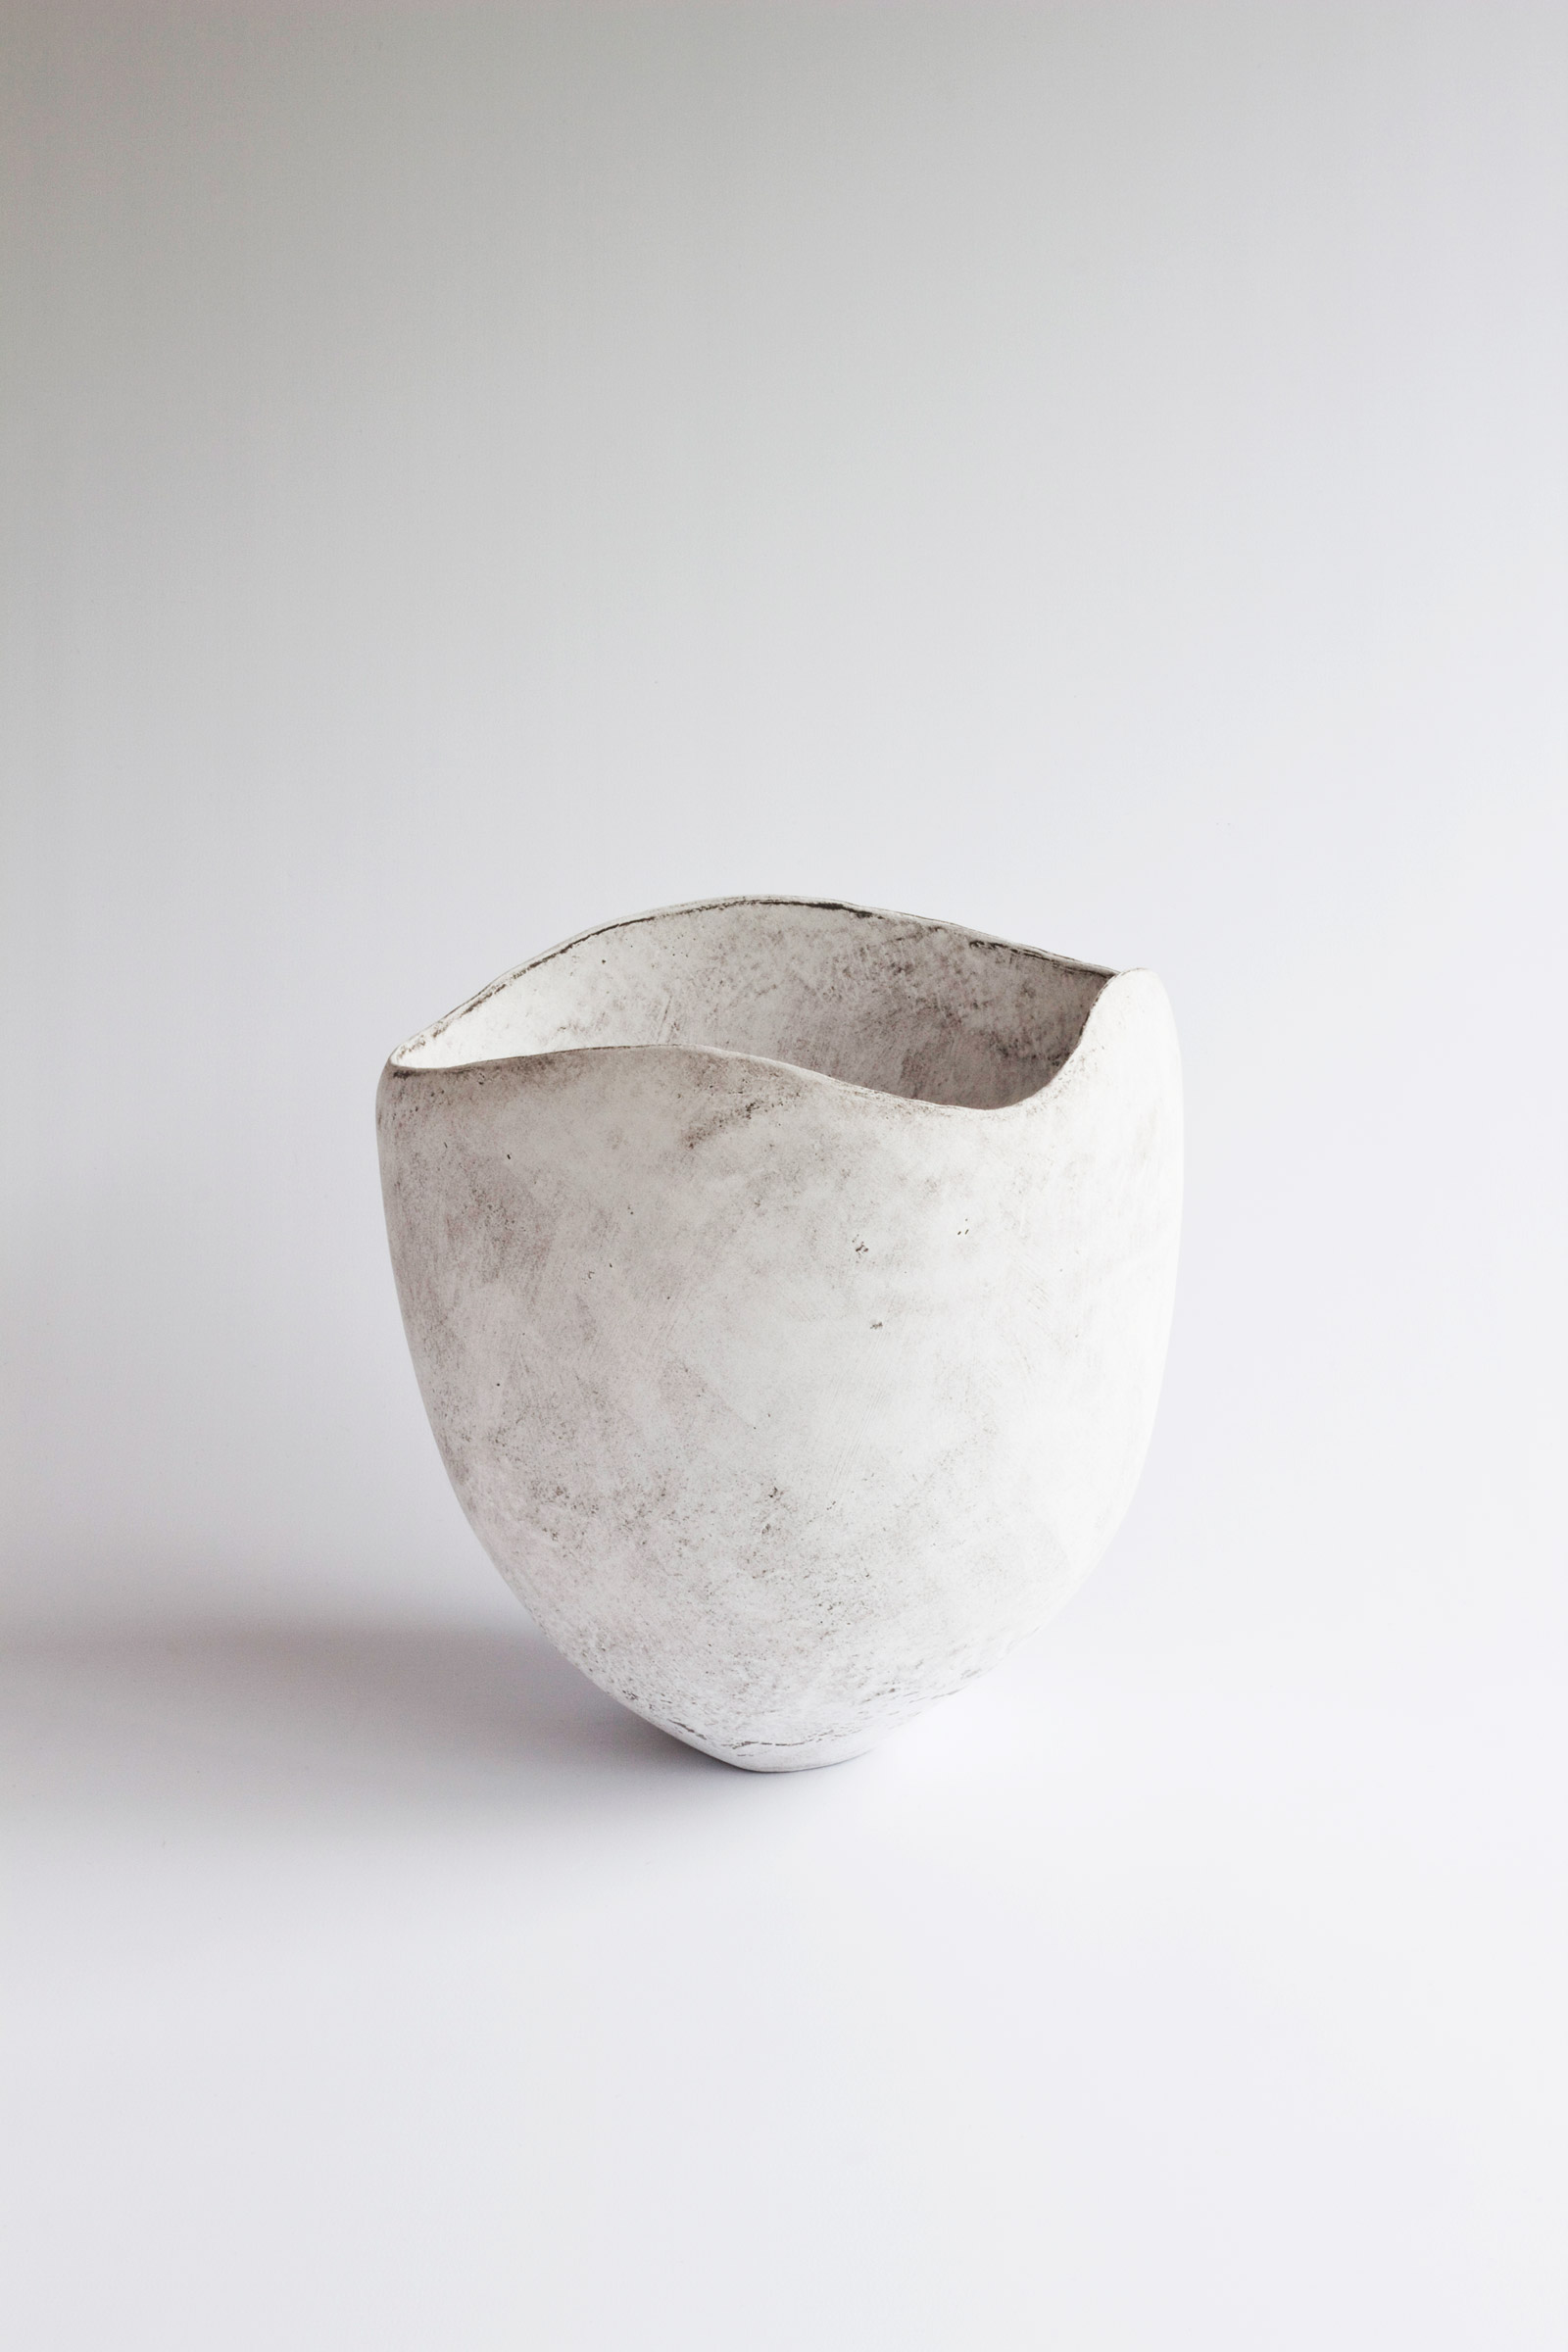 Yasha Butler Lithic Vessel Large Ceramic Sculpture Bowl White